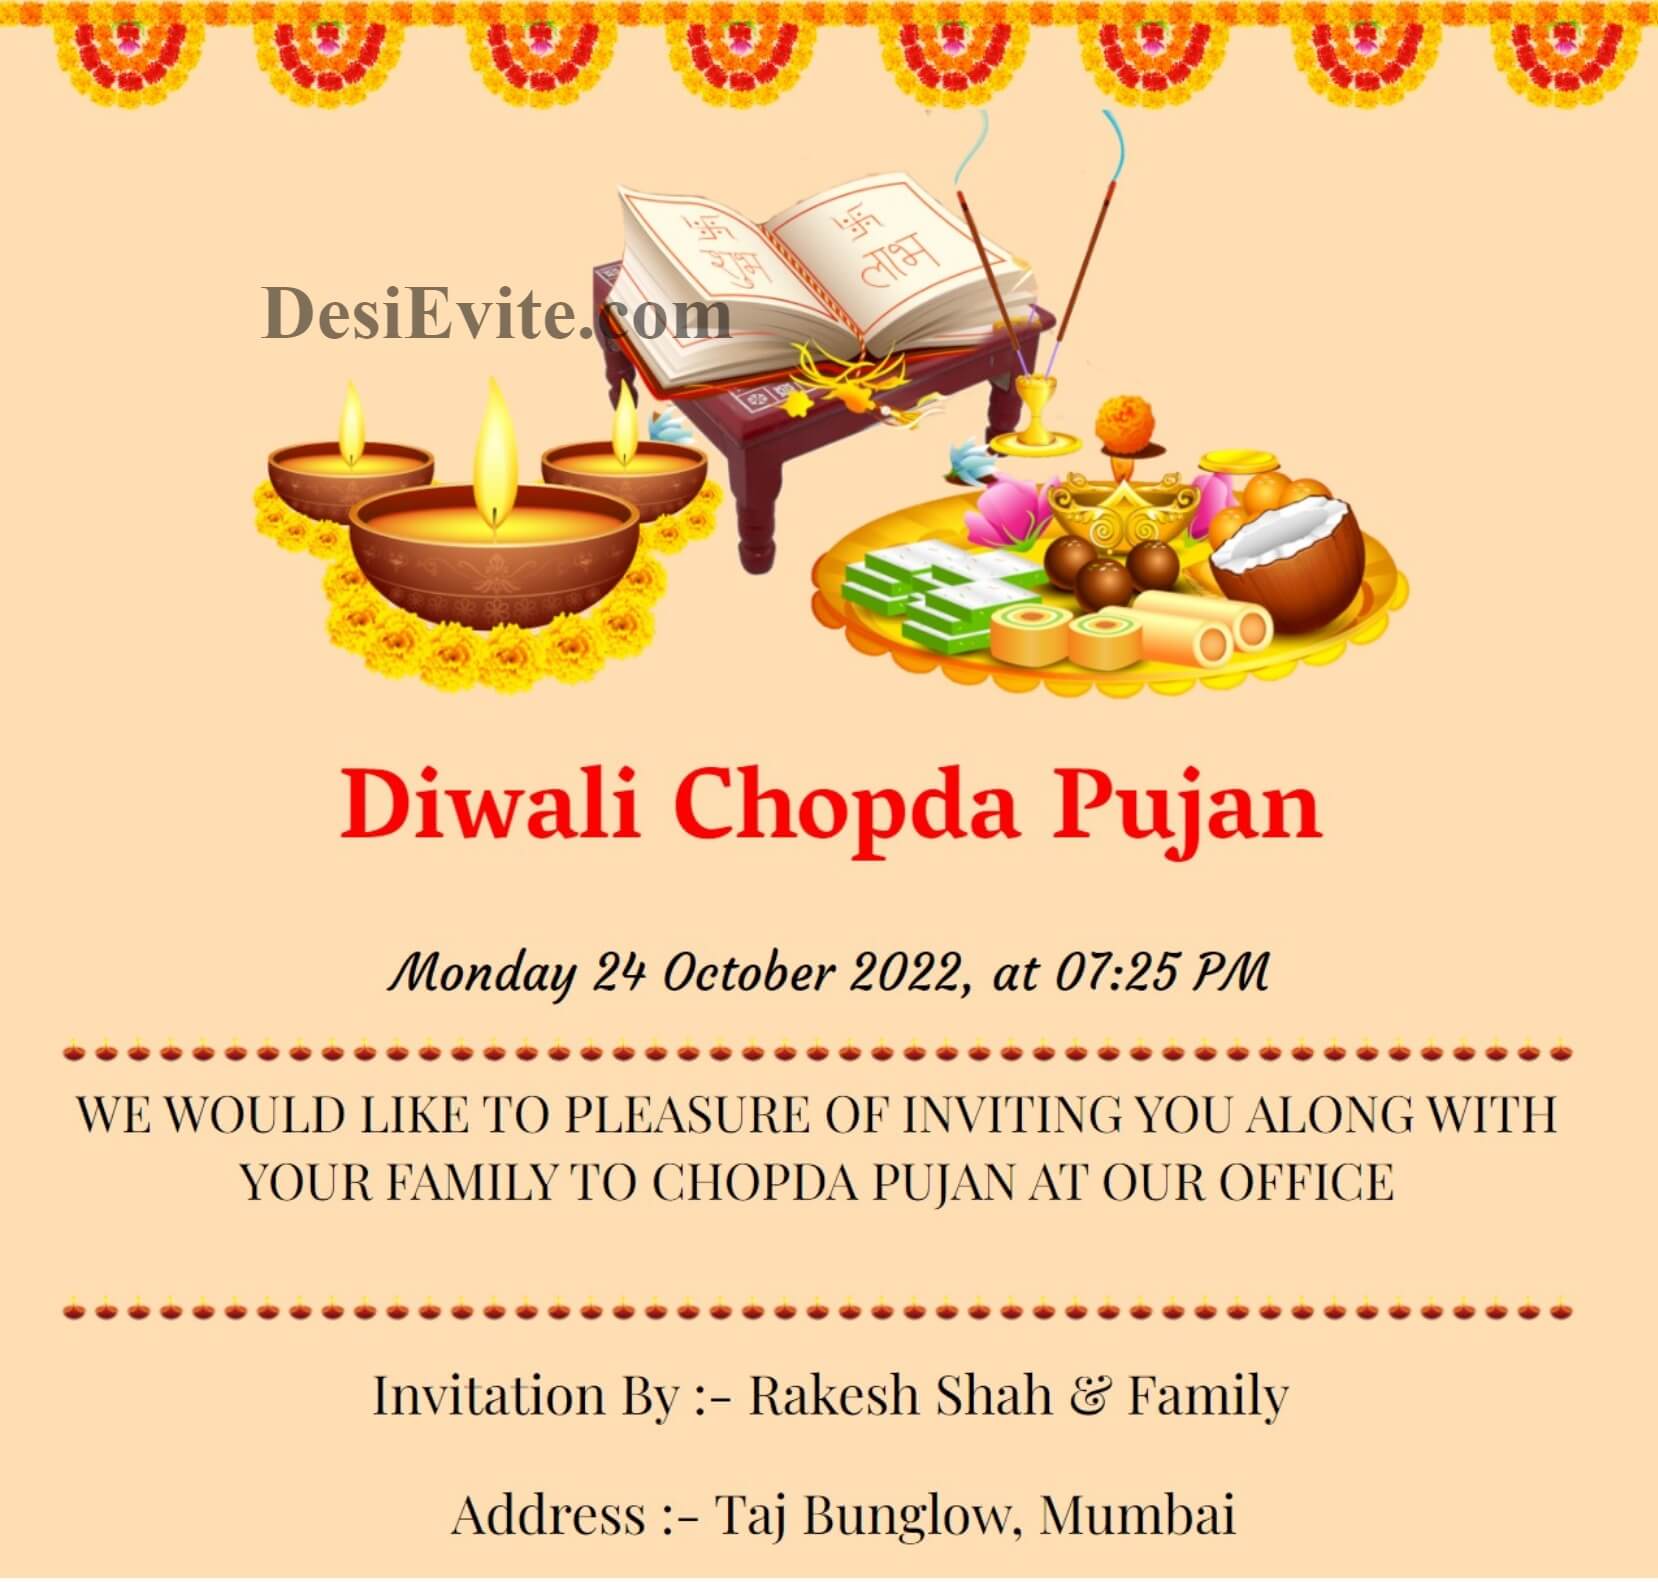 diwali chopda pujan invitation card 72 